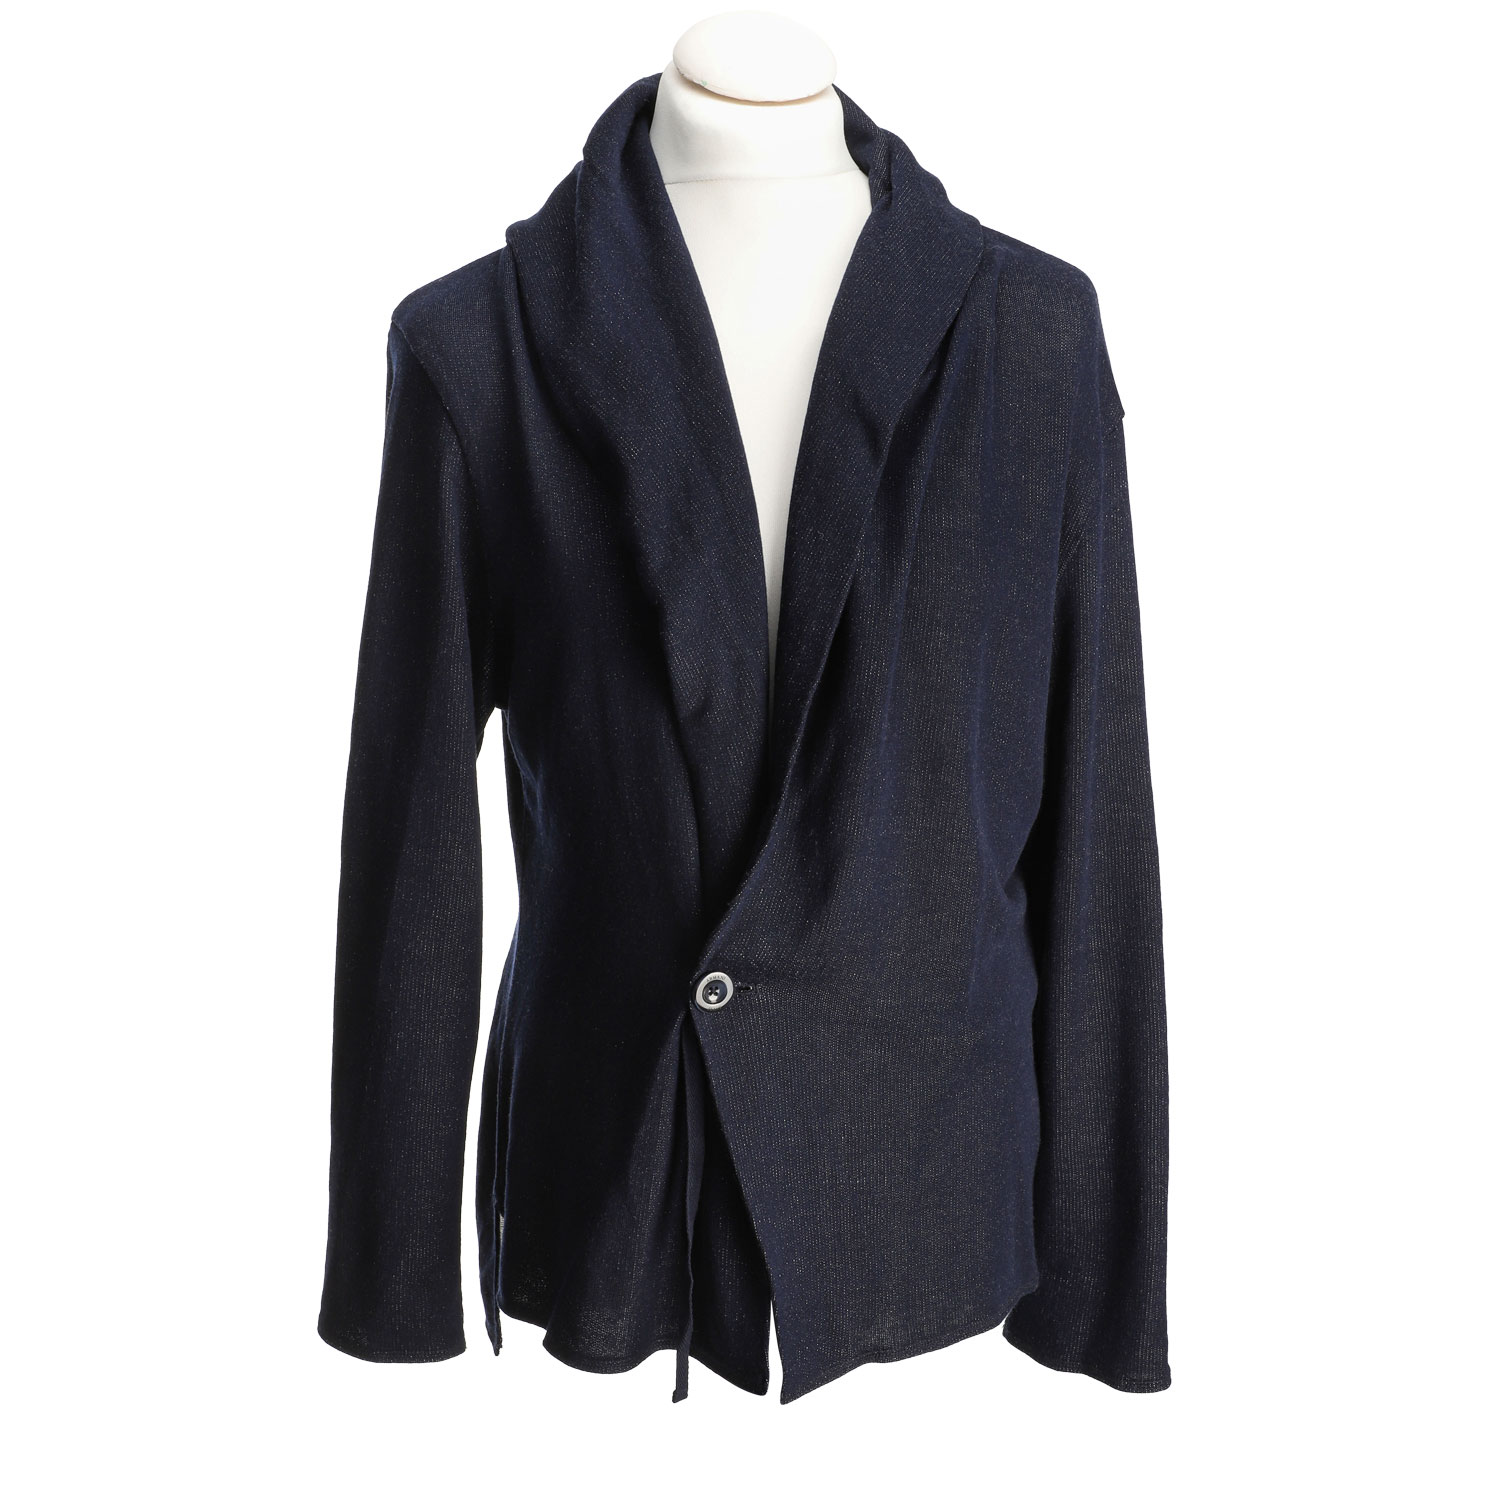 | ARMANI JEANS jacket, size M. purchase